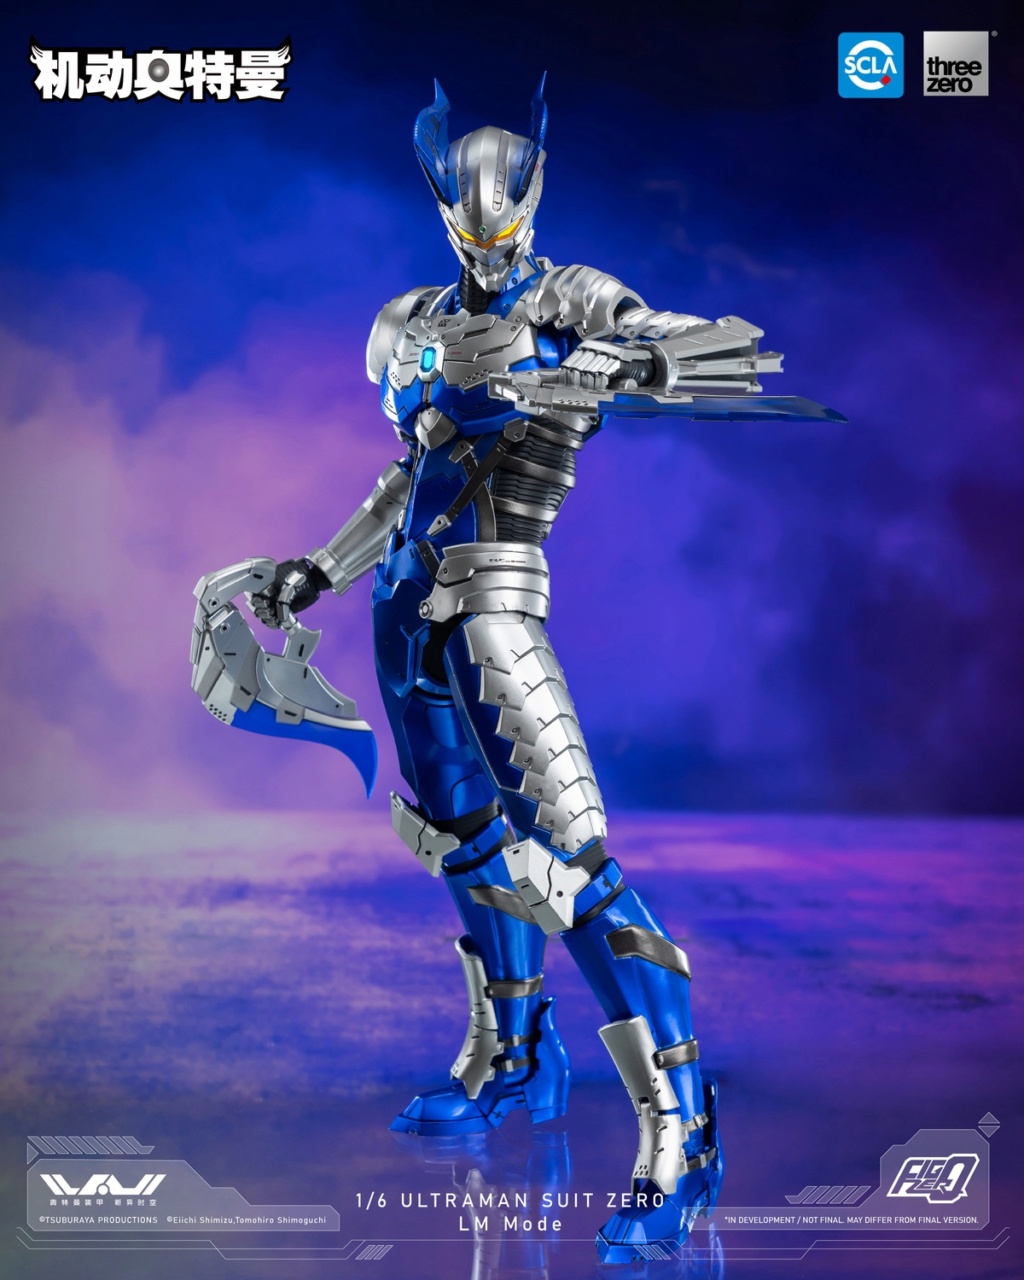 LMMode - NEW PRODUCT: Threezero: FigZero 1/6 Ultraman Suit Zero - LM Mode action figure 17251810